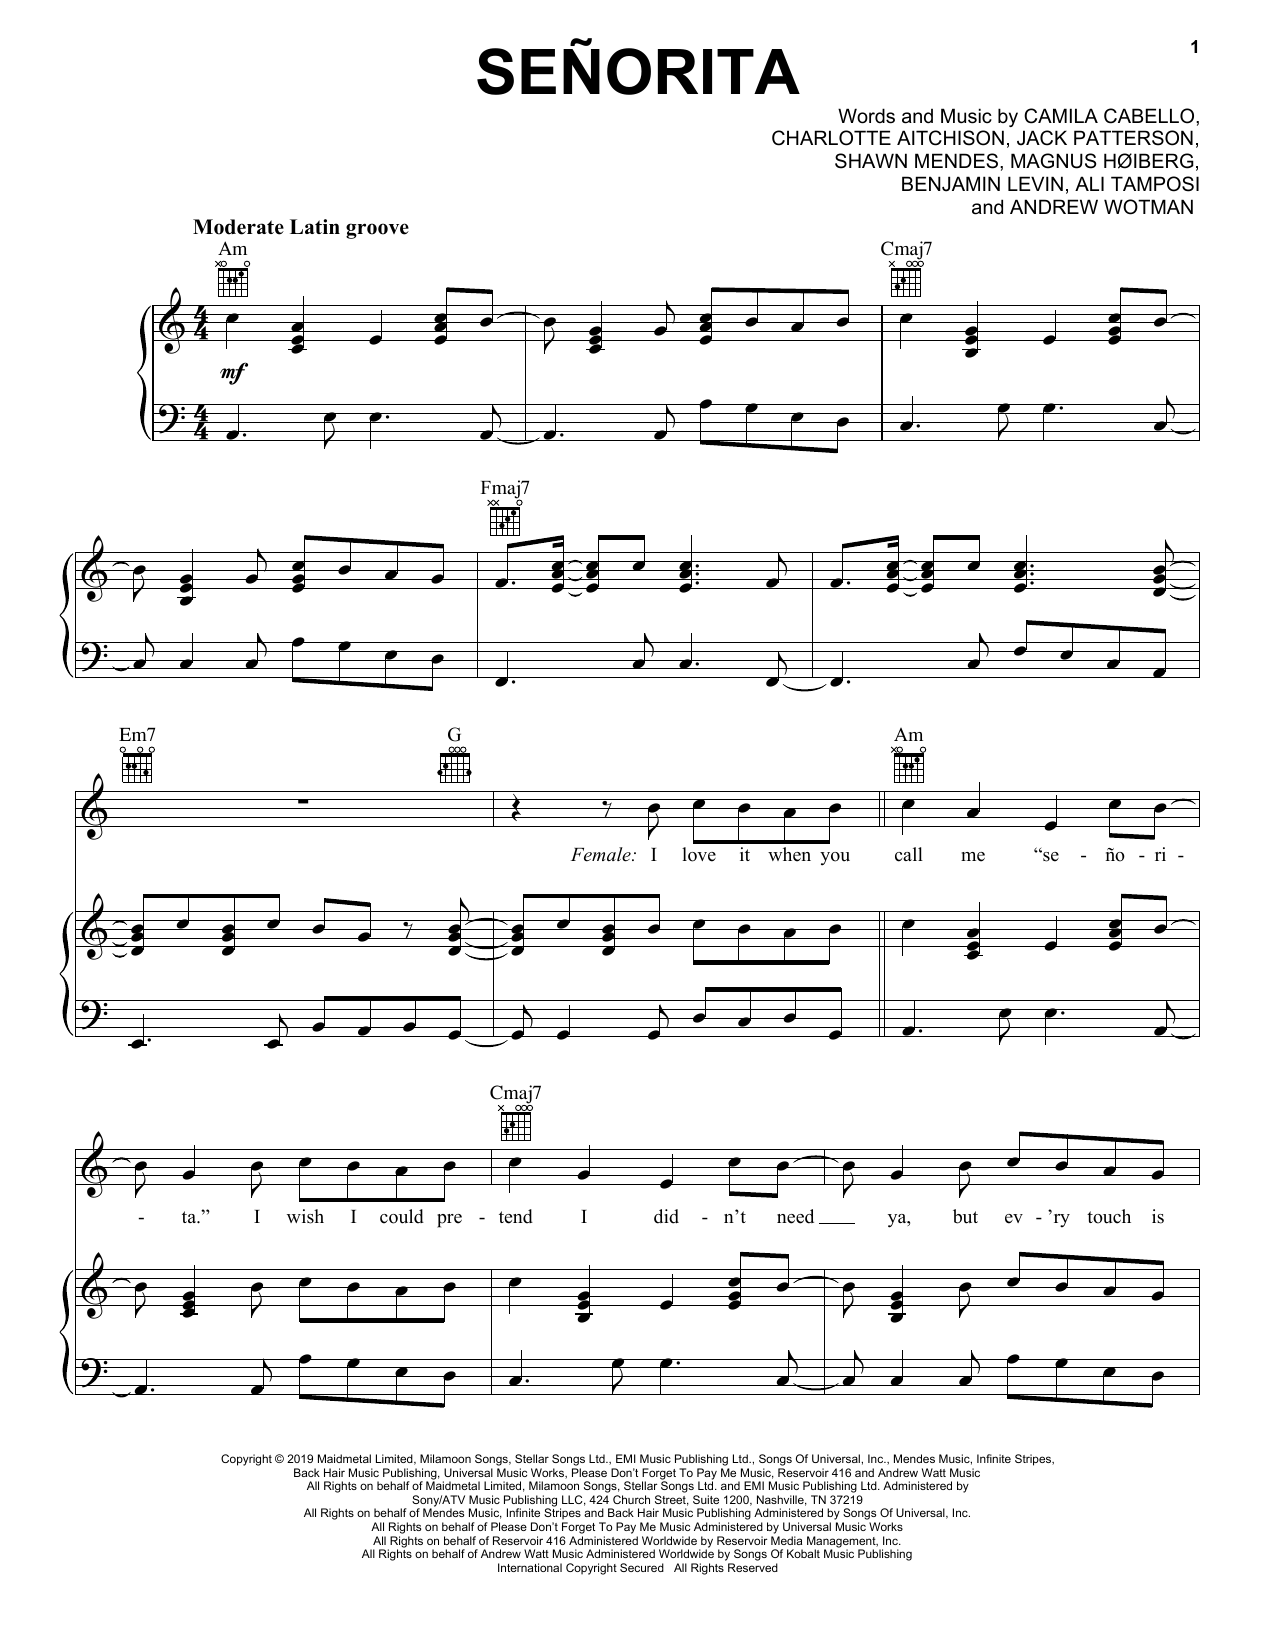 Shawn Mendes & Camila Cabello Señorita Sheet Music Notes & Chords for Violin Duet - Download or Print PDF